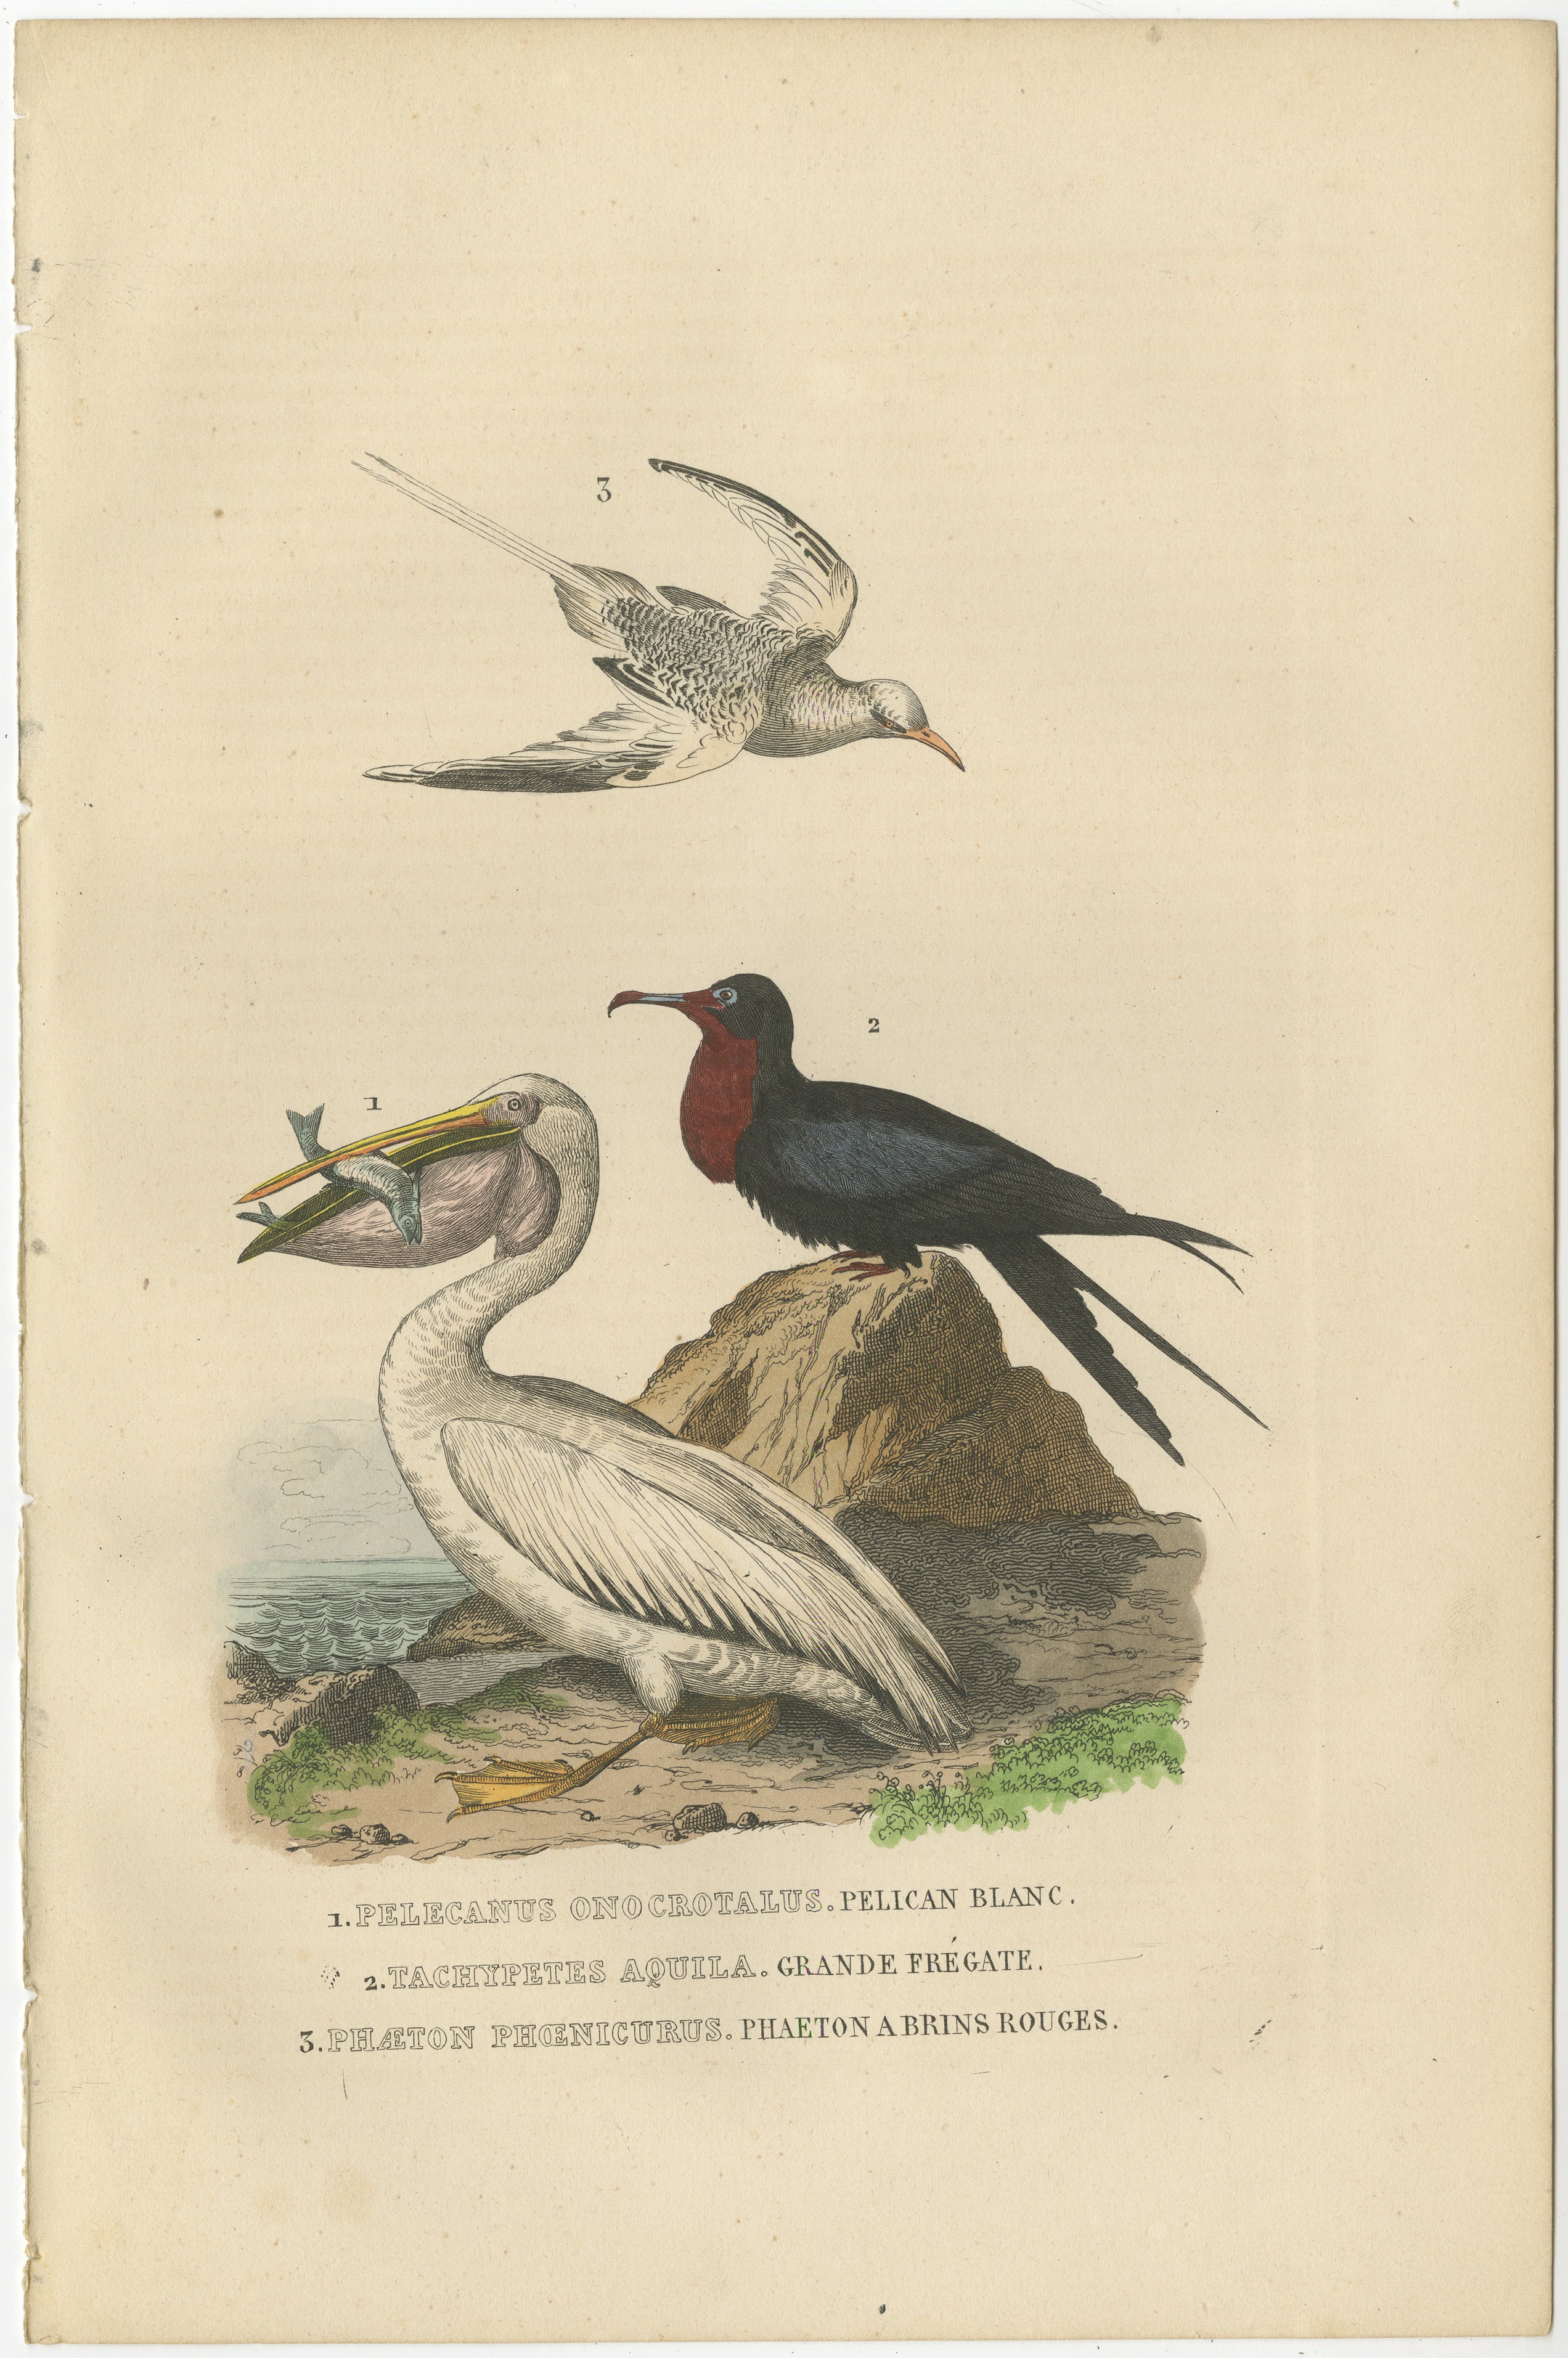 1. PELECANUS ONOCROTALUS – PELICAN BLANC, 2. TACHYPETES AQUILA – GRANDE FREGATE, 3. PHAETON PHOENICURUS – PHEATON A BRINS ROUGES.

Translated: – 1. Great White Pelican, Eastern White Pelican, White Pelican, 2. Great Frigate Bird, 3. Red-Tailed